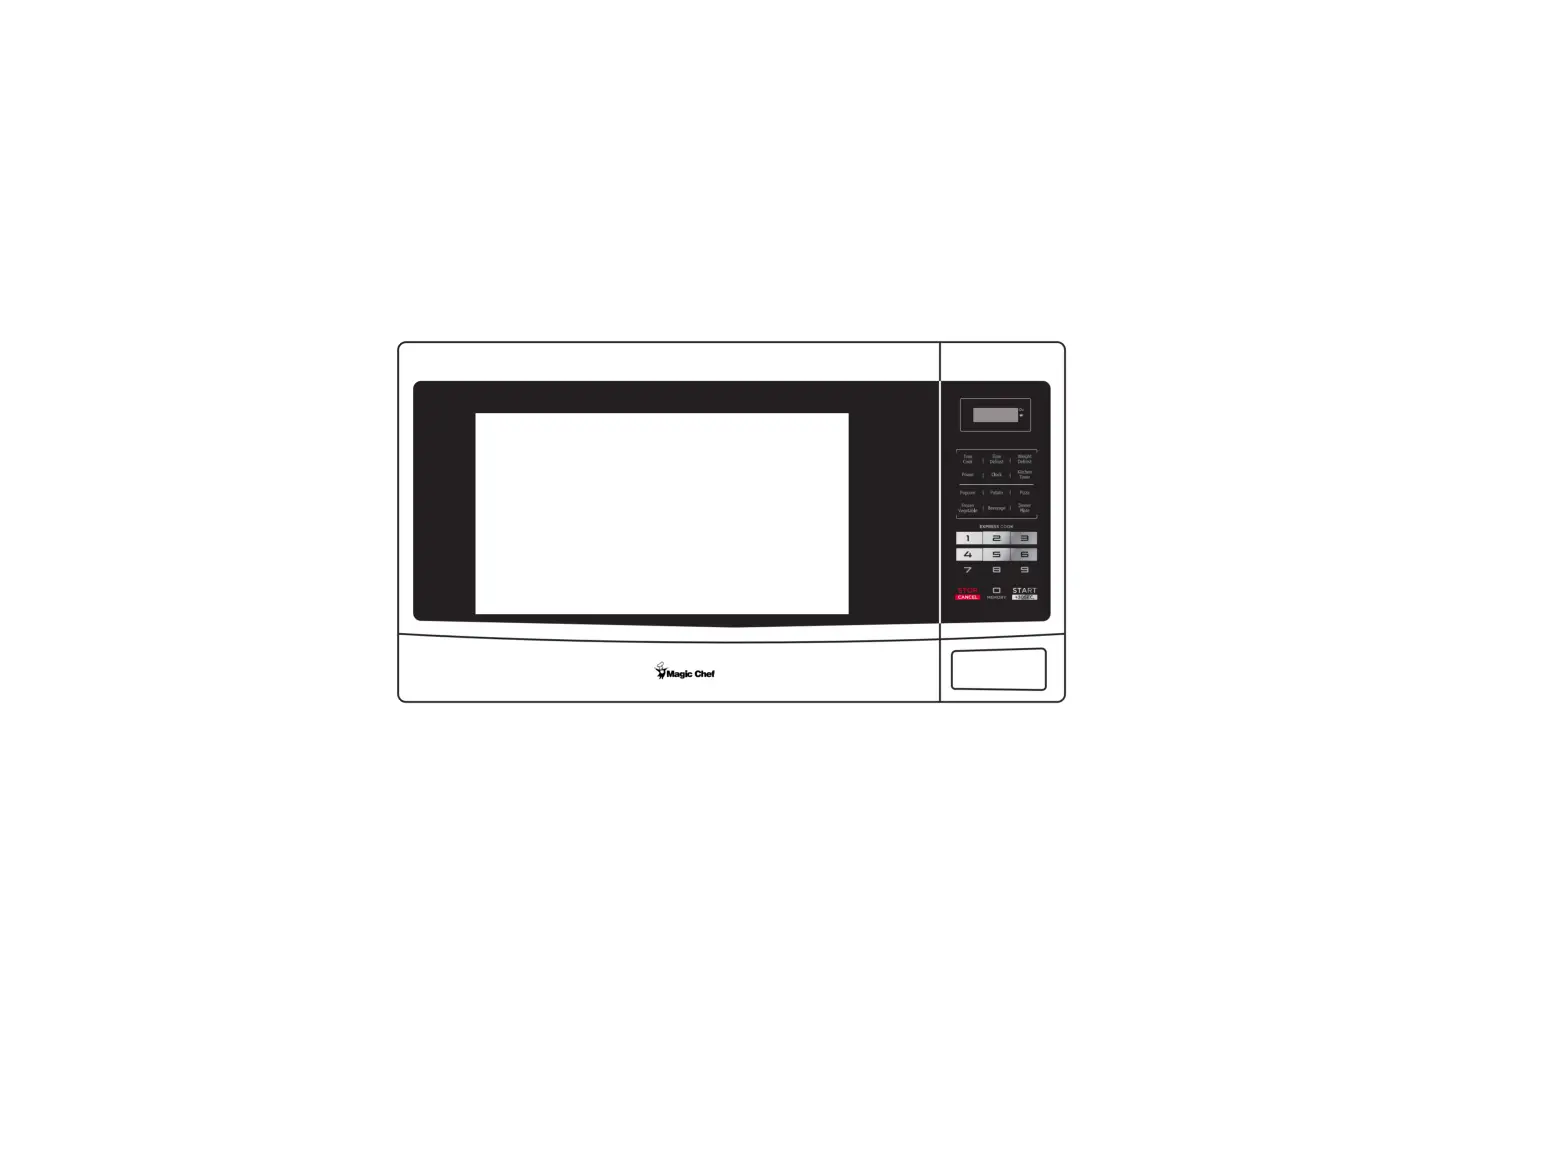 Magic Chef Countertop Microwave Oven User Manual - Manualsee